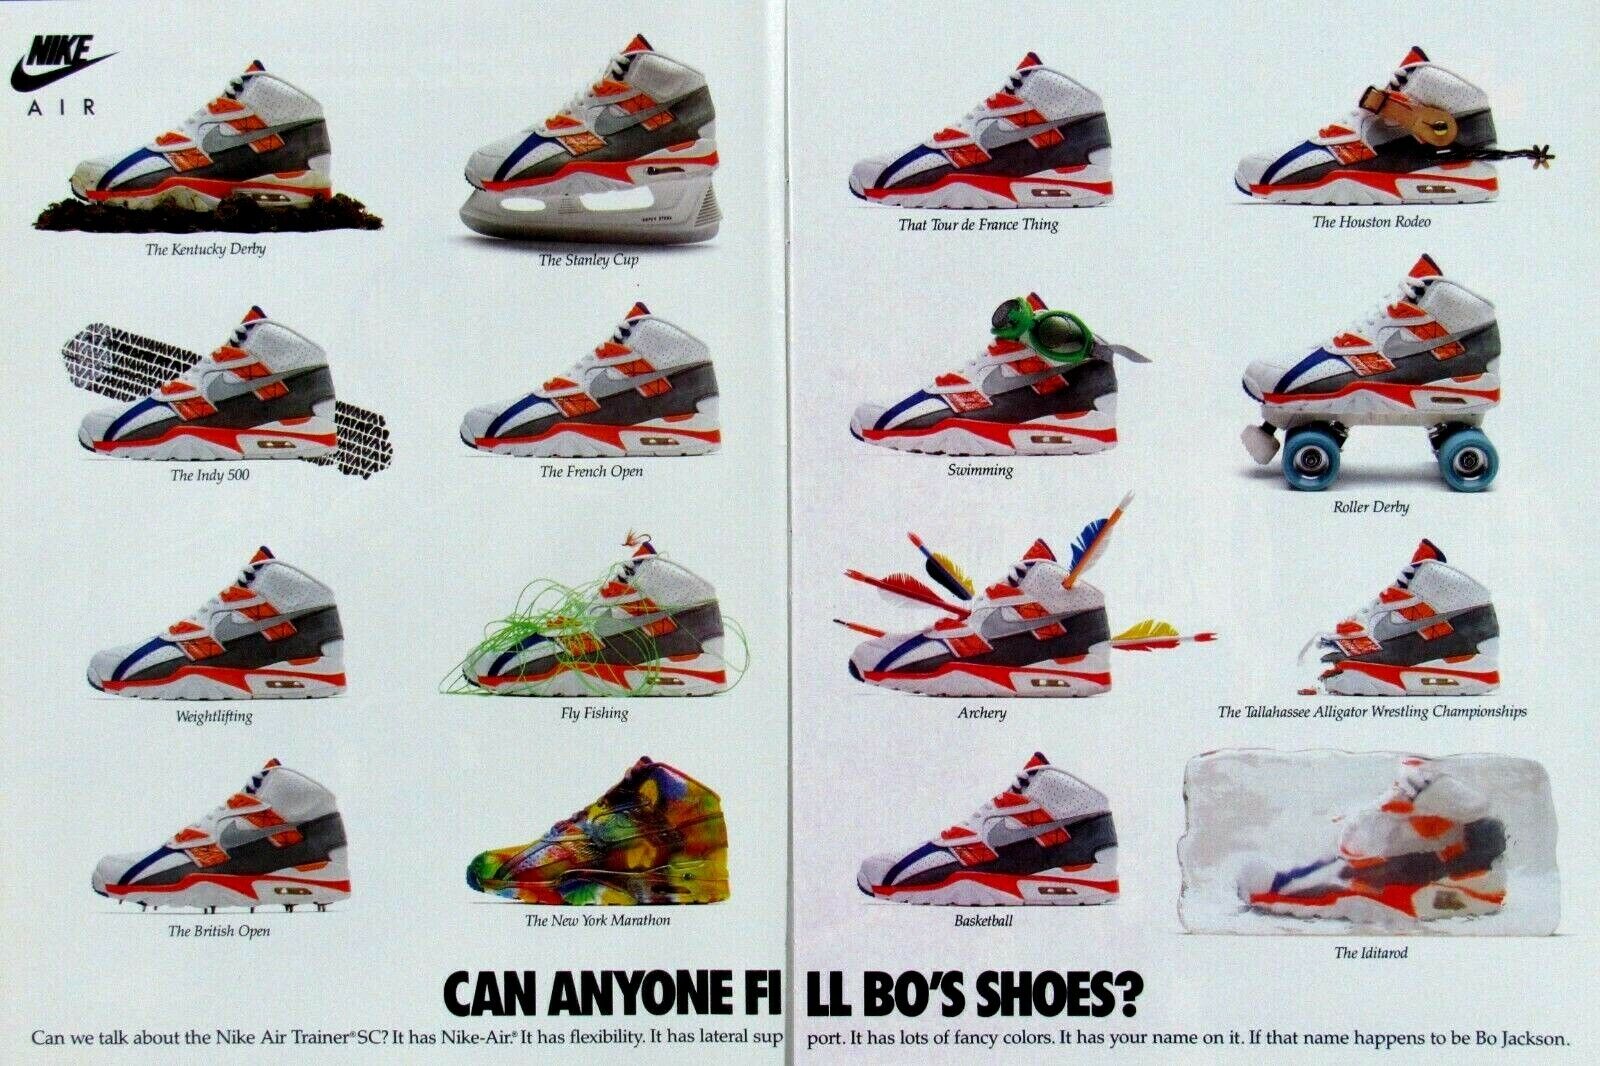 1989 Bo Jackson Nike Fill Bo's Shoes Vintage Original 2 Page Print Ad 8.5 x 11